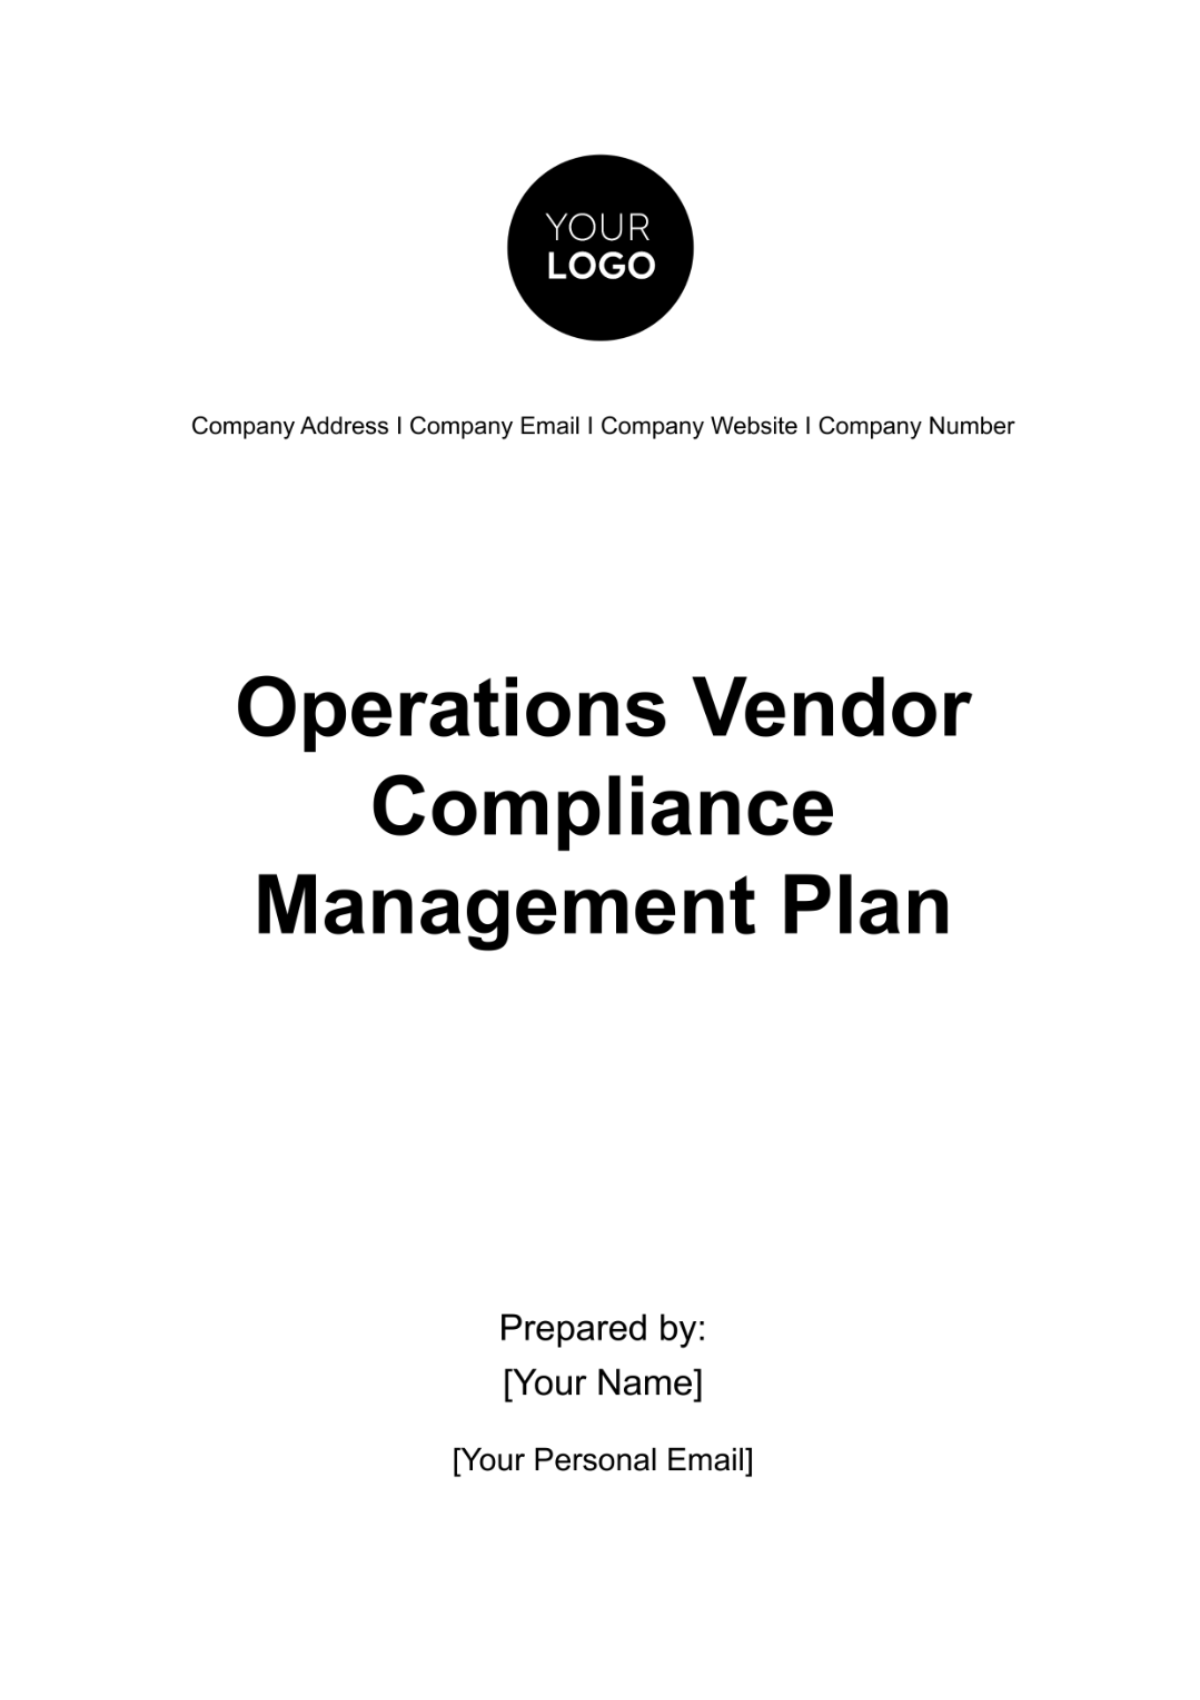 Operations Vendor Compliance Management Plan Template